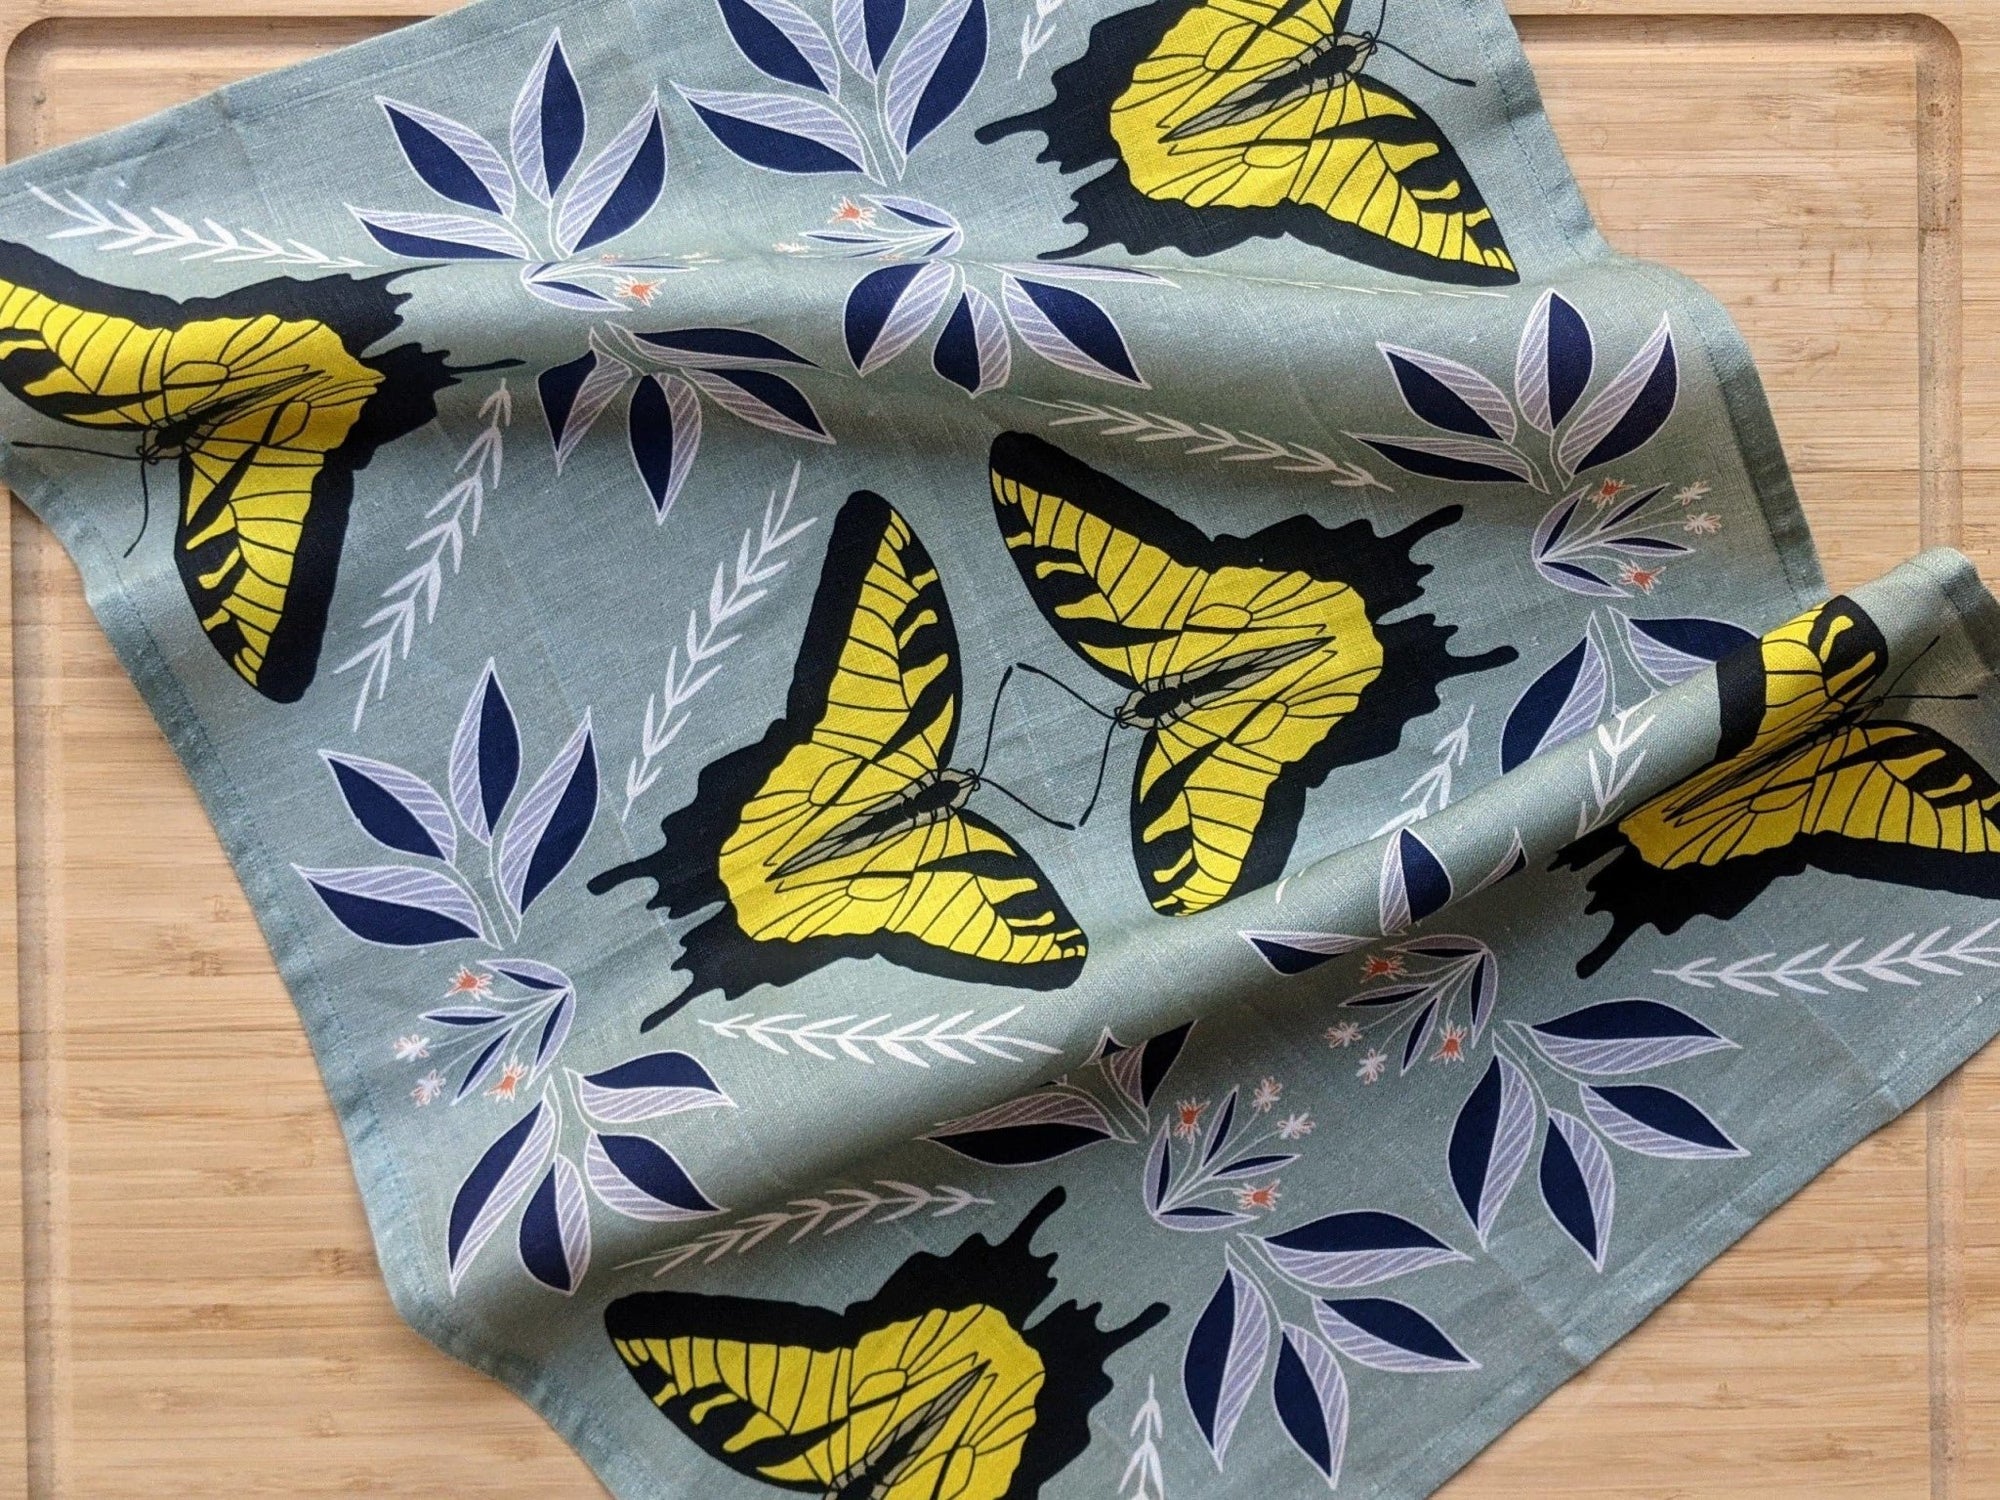 Swallowtail Butterfly Tea Towel - Abigail Fox Designs